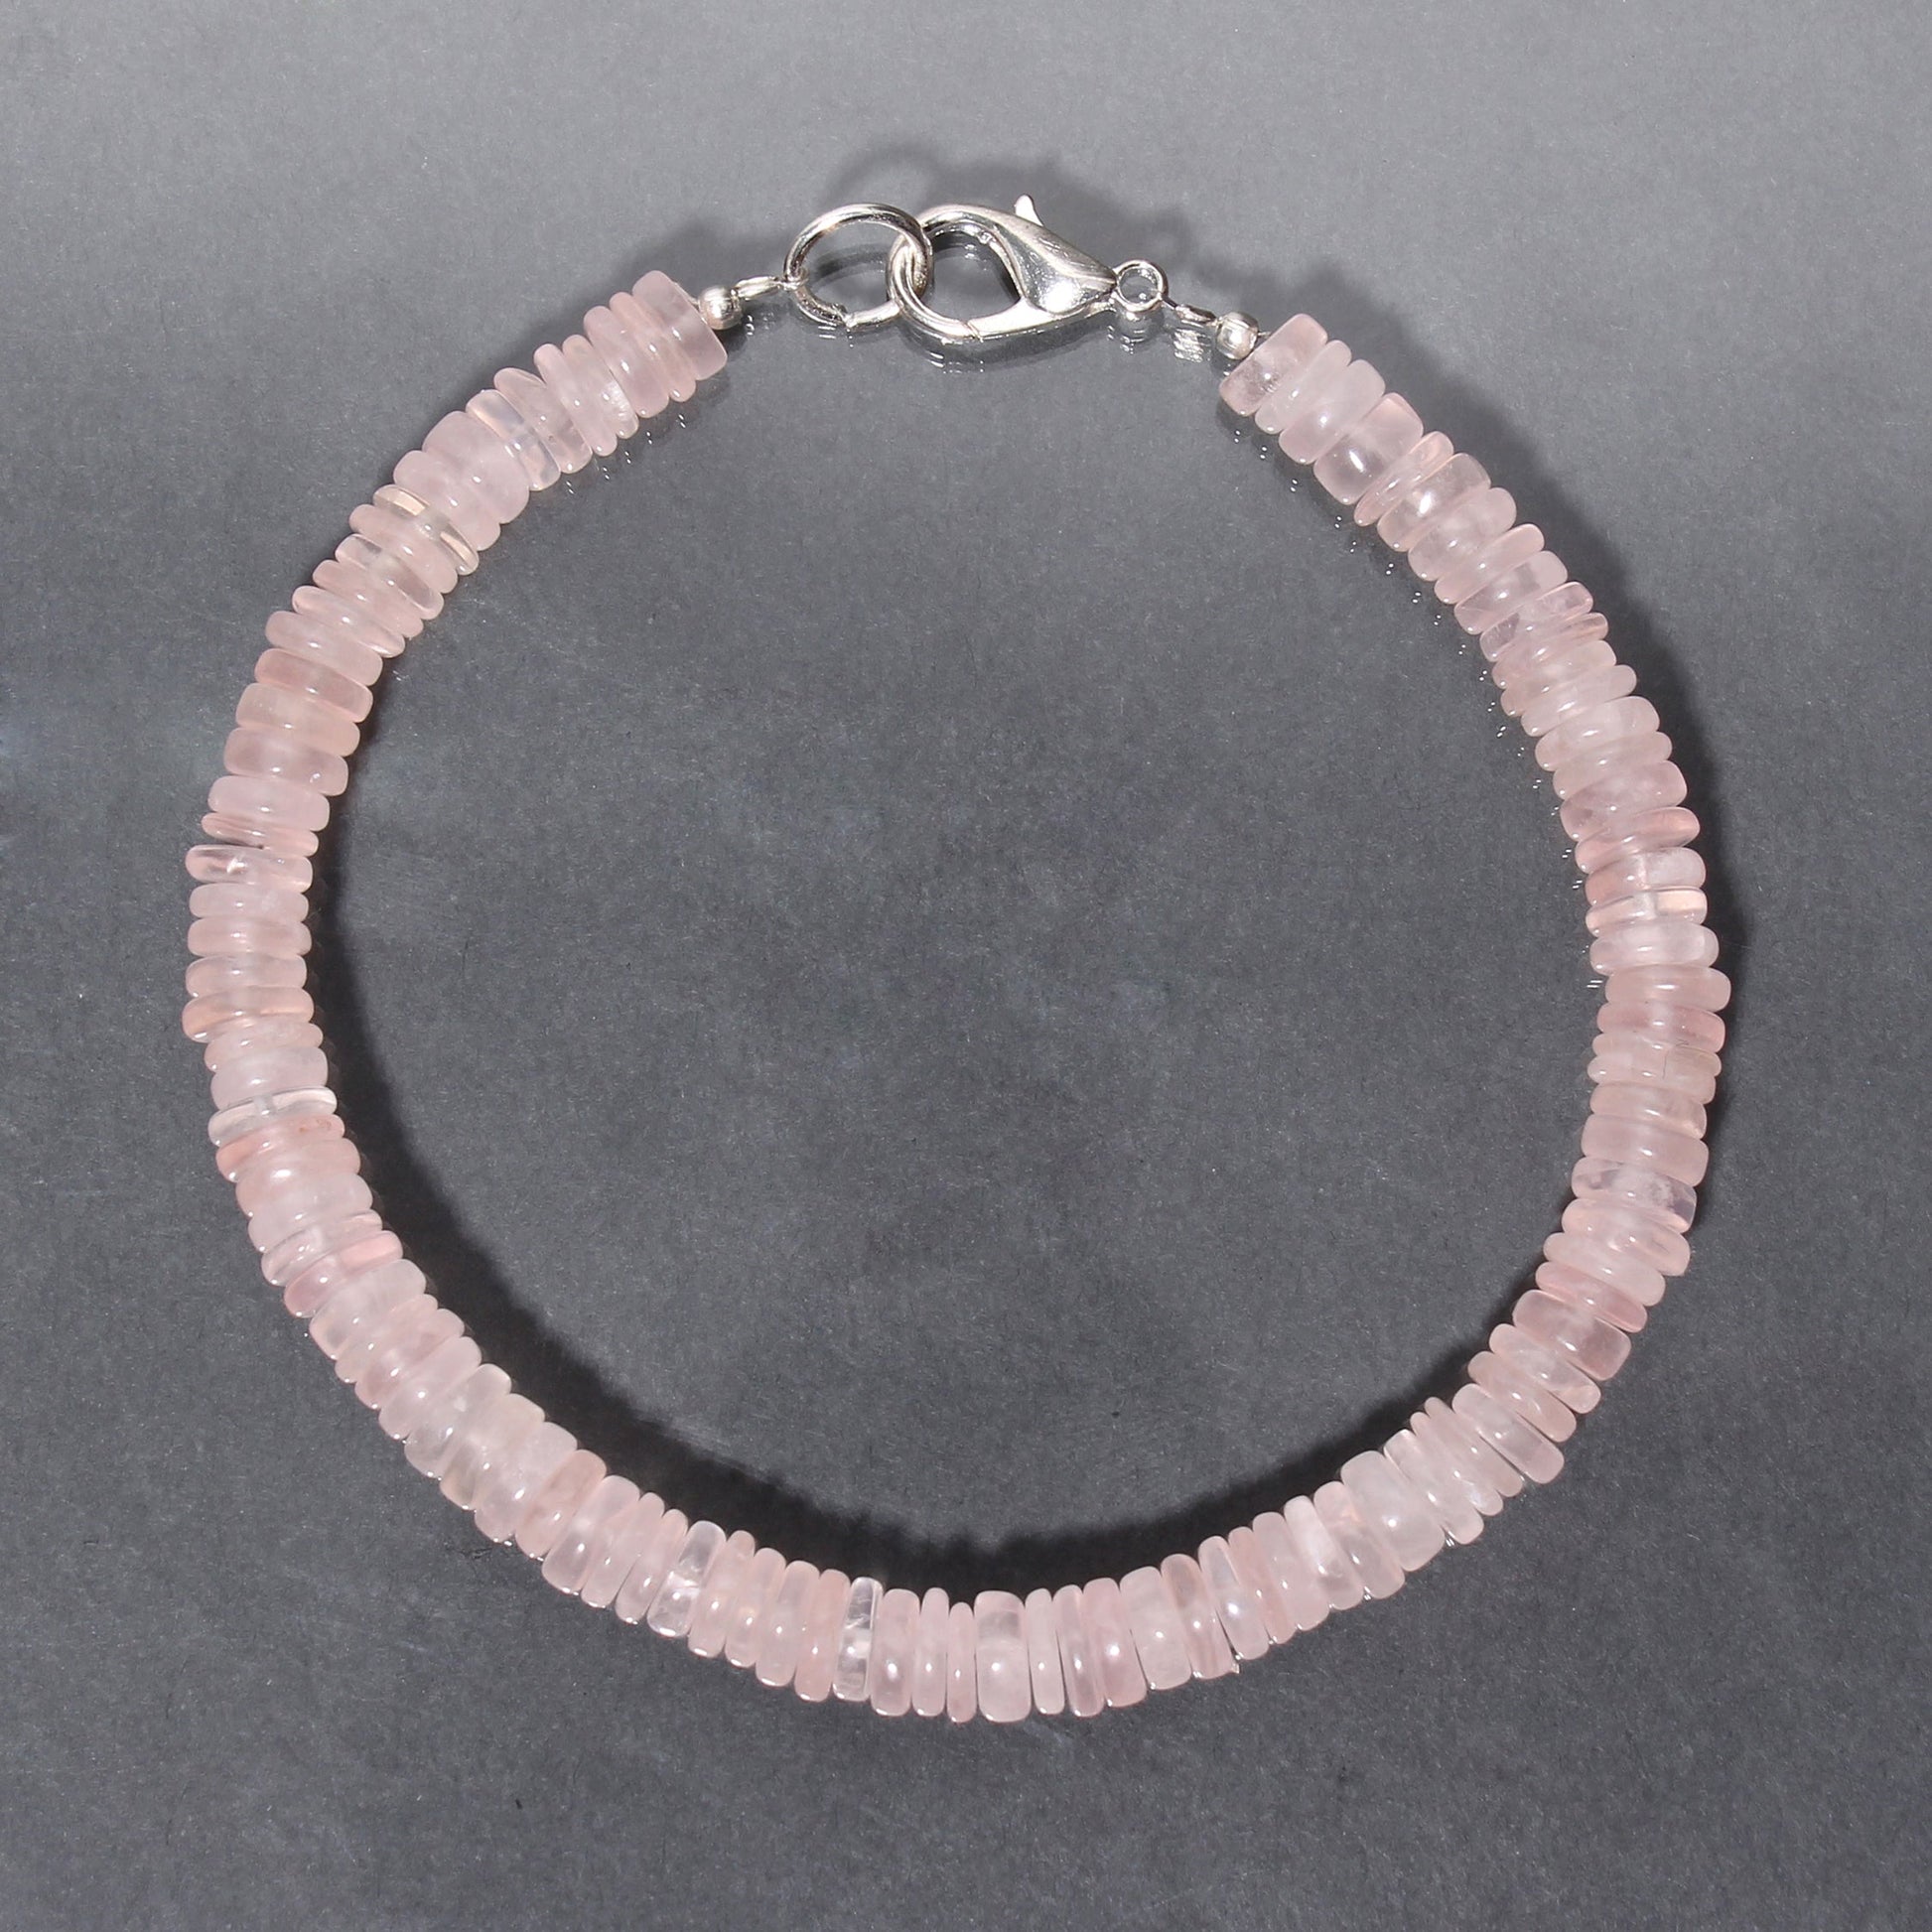 Captivating Rose Quartz Heishi Bracelet with 925 Silver Lock - A Jewelry Box Essential! GemsRush